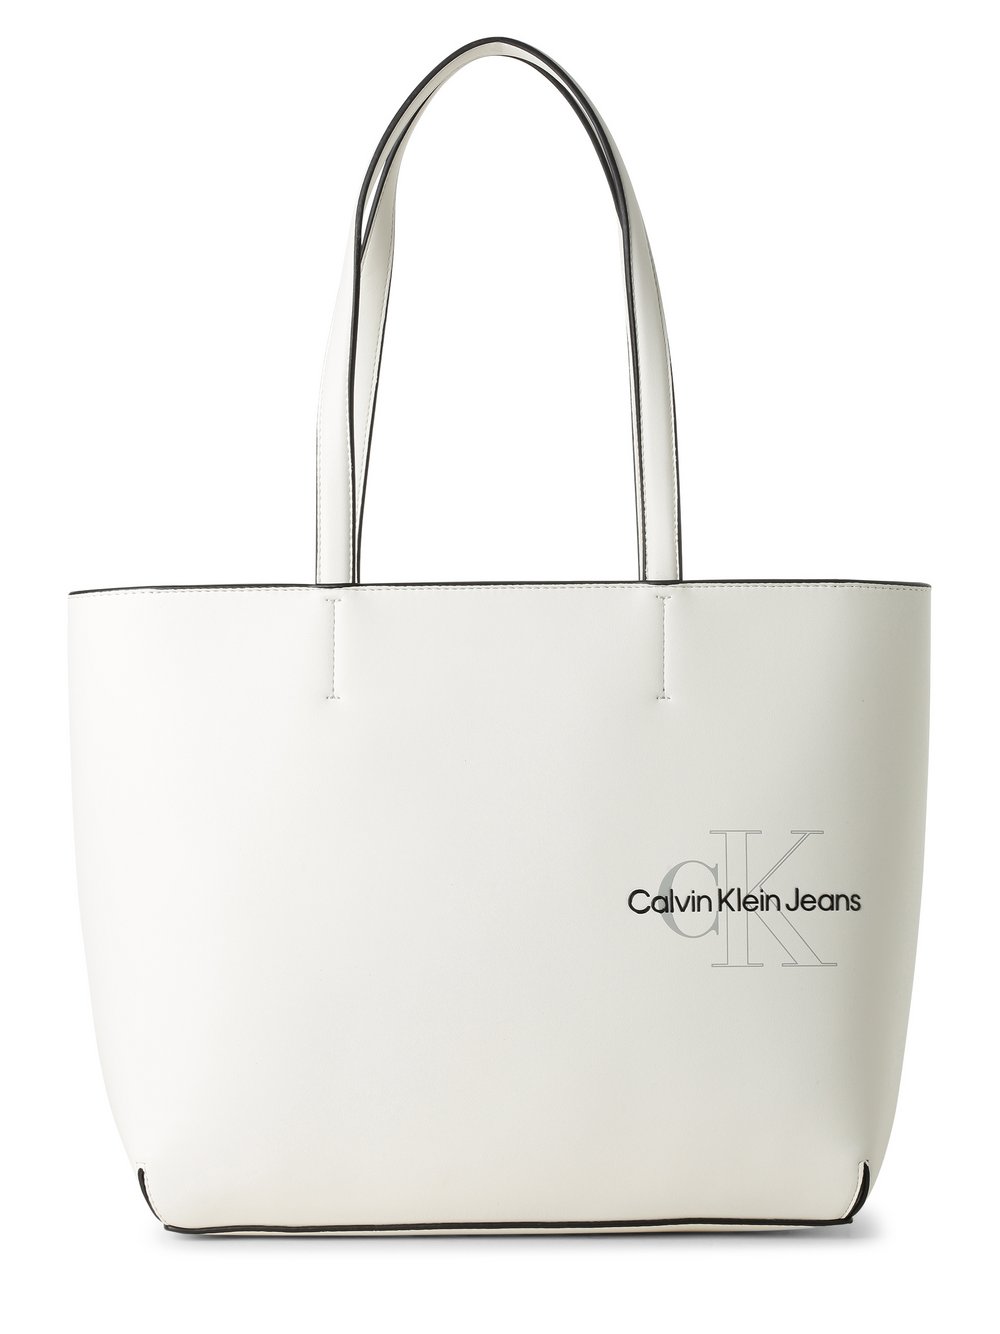 Calvin Klein Jeans - Damska torba shopper, biały